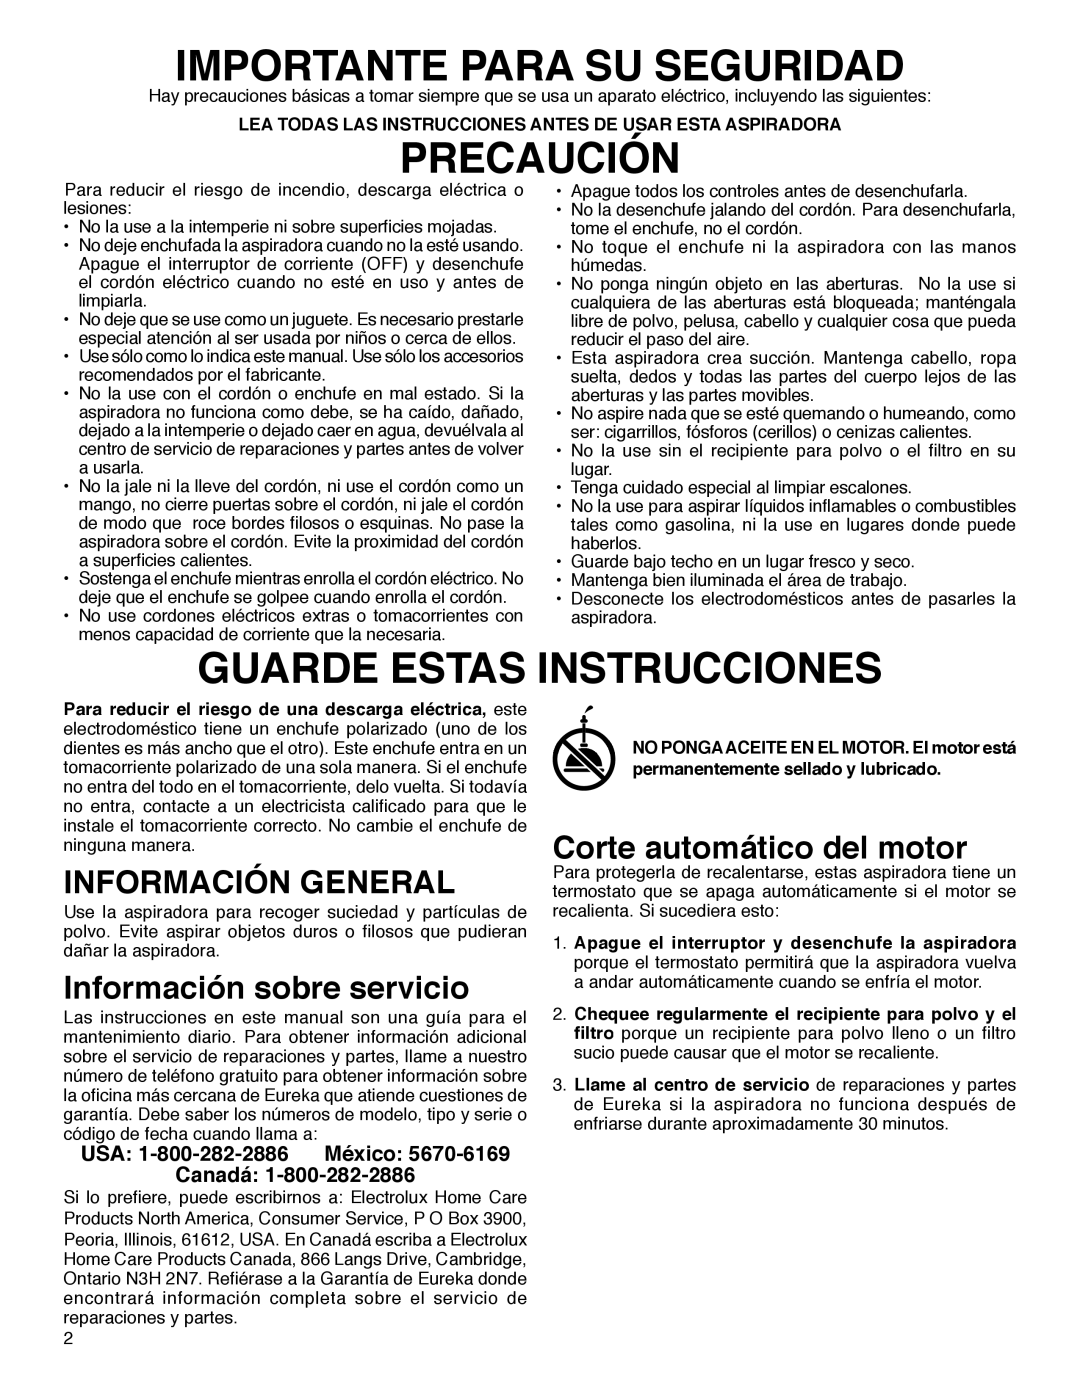 Eureka 420 Información General, Información sobre servicio, Corte automático del motor, USA 1-800-282-2886 México Canadá 